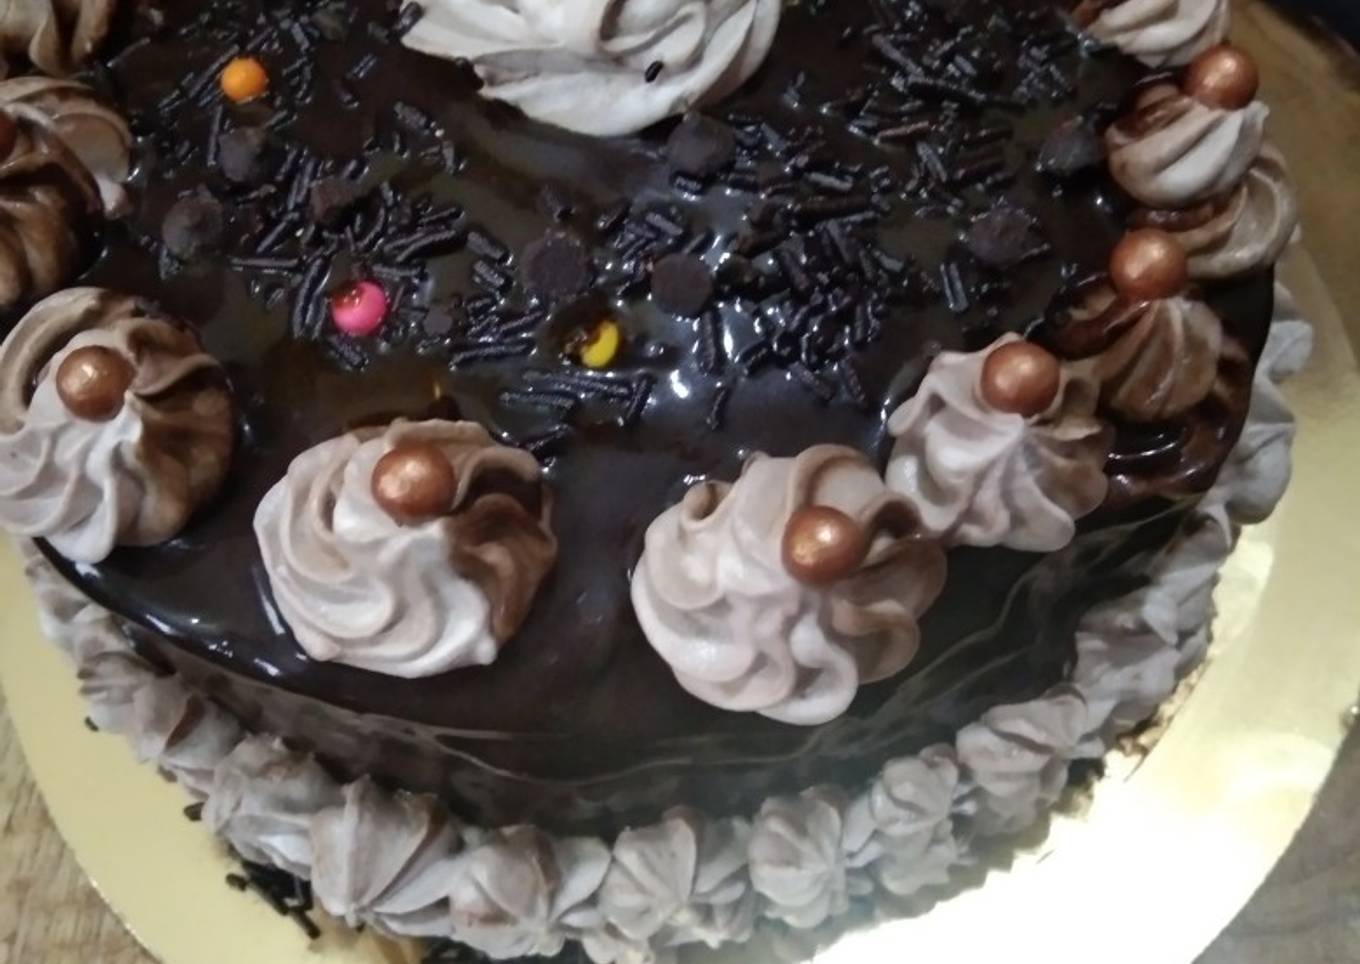 Dark chocolate cake